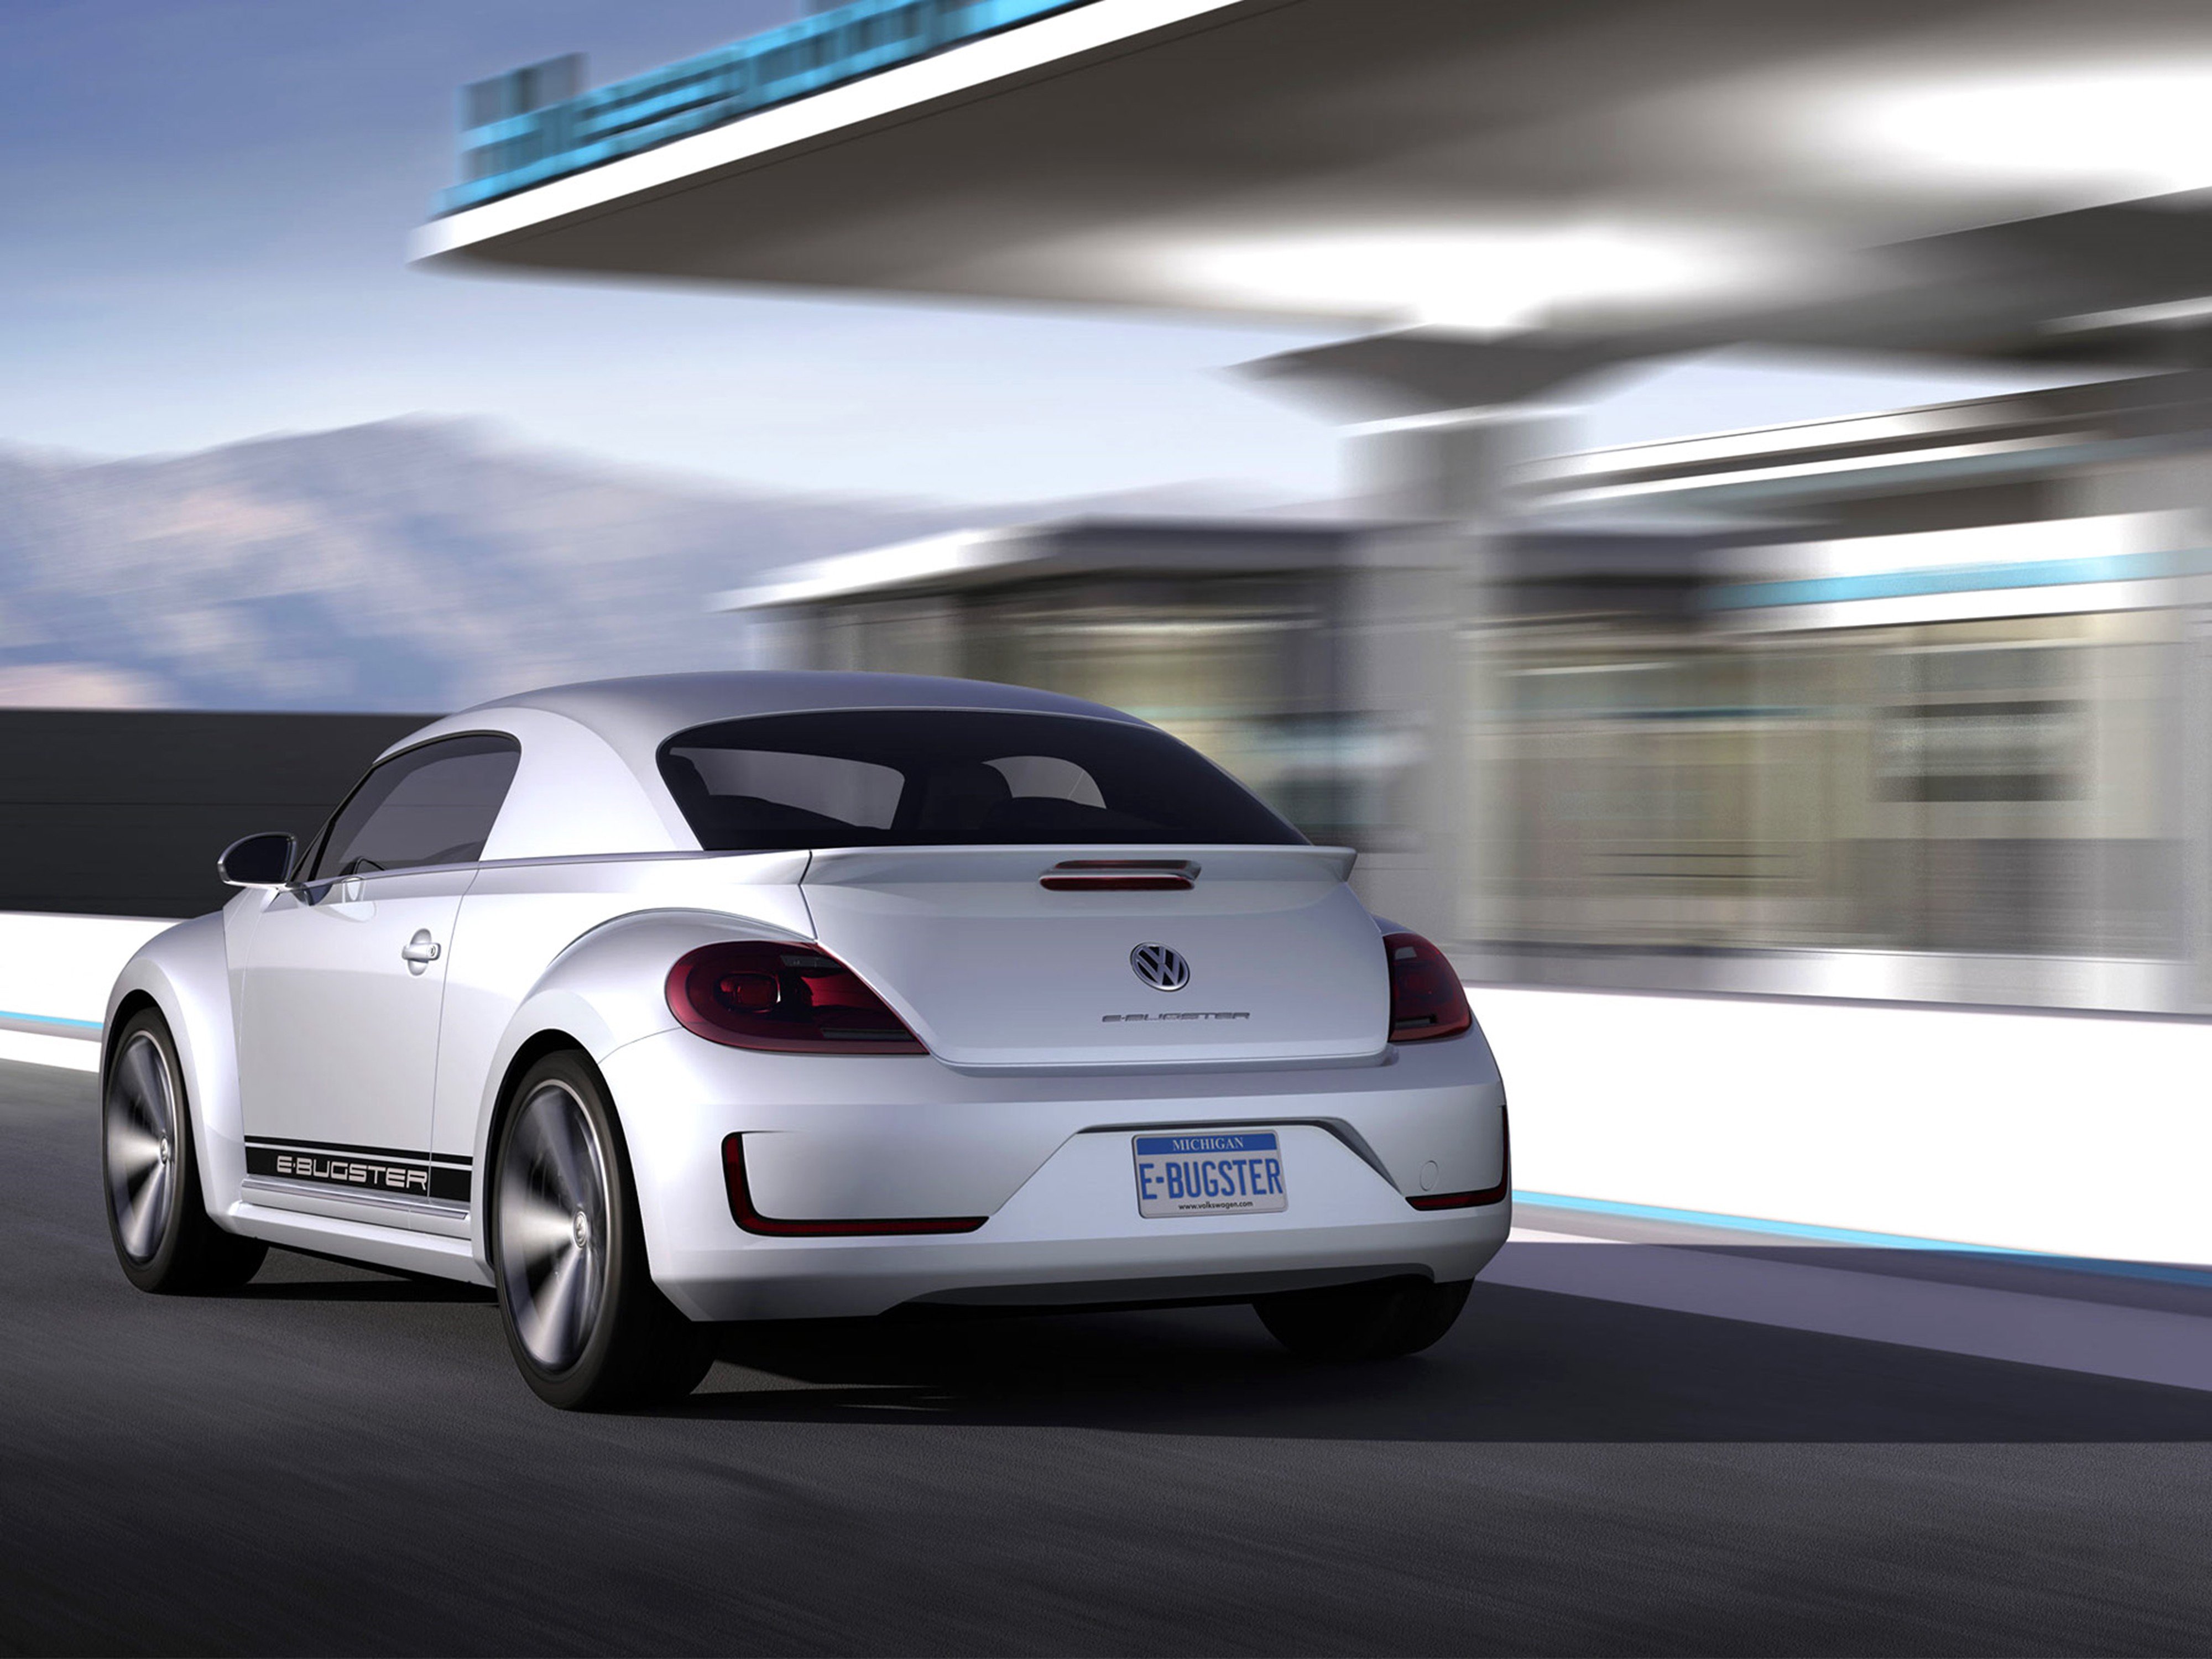 2012, Volkswagen, E bugster, Concept v6, Car, Vehicle, Germany, 4000x3000,  1 Wallpaper